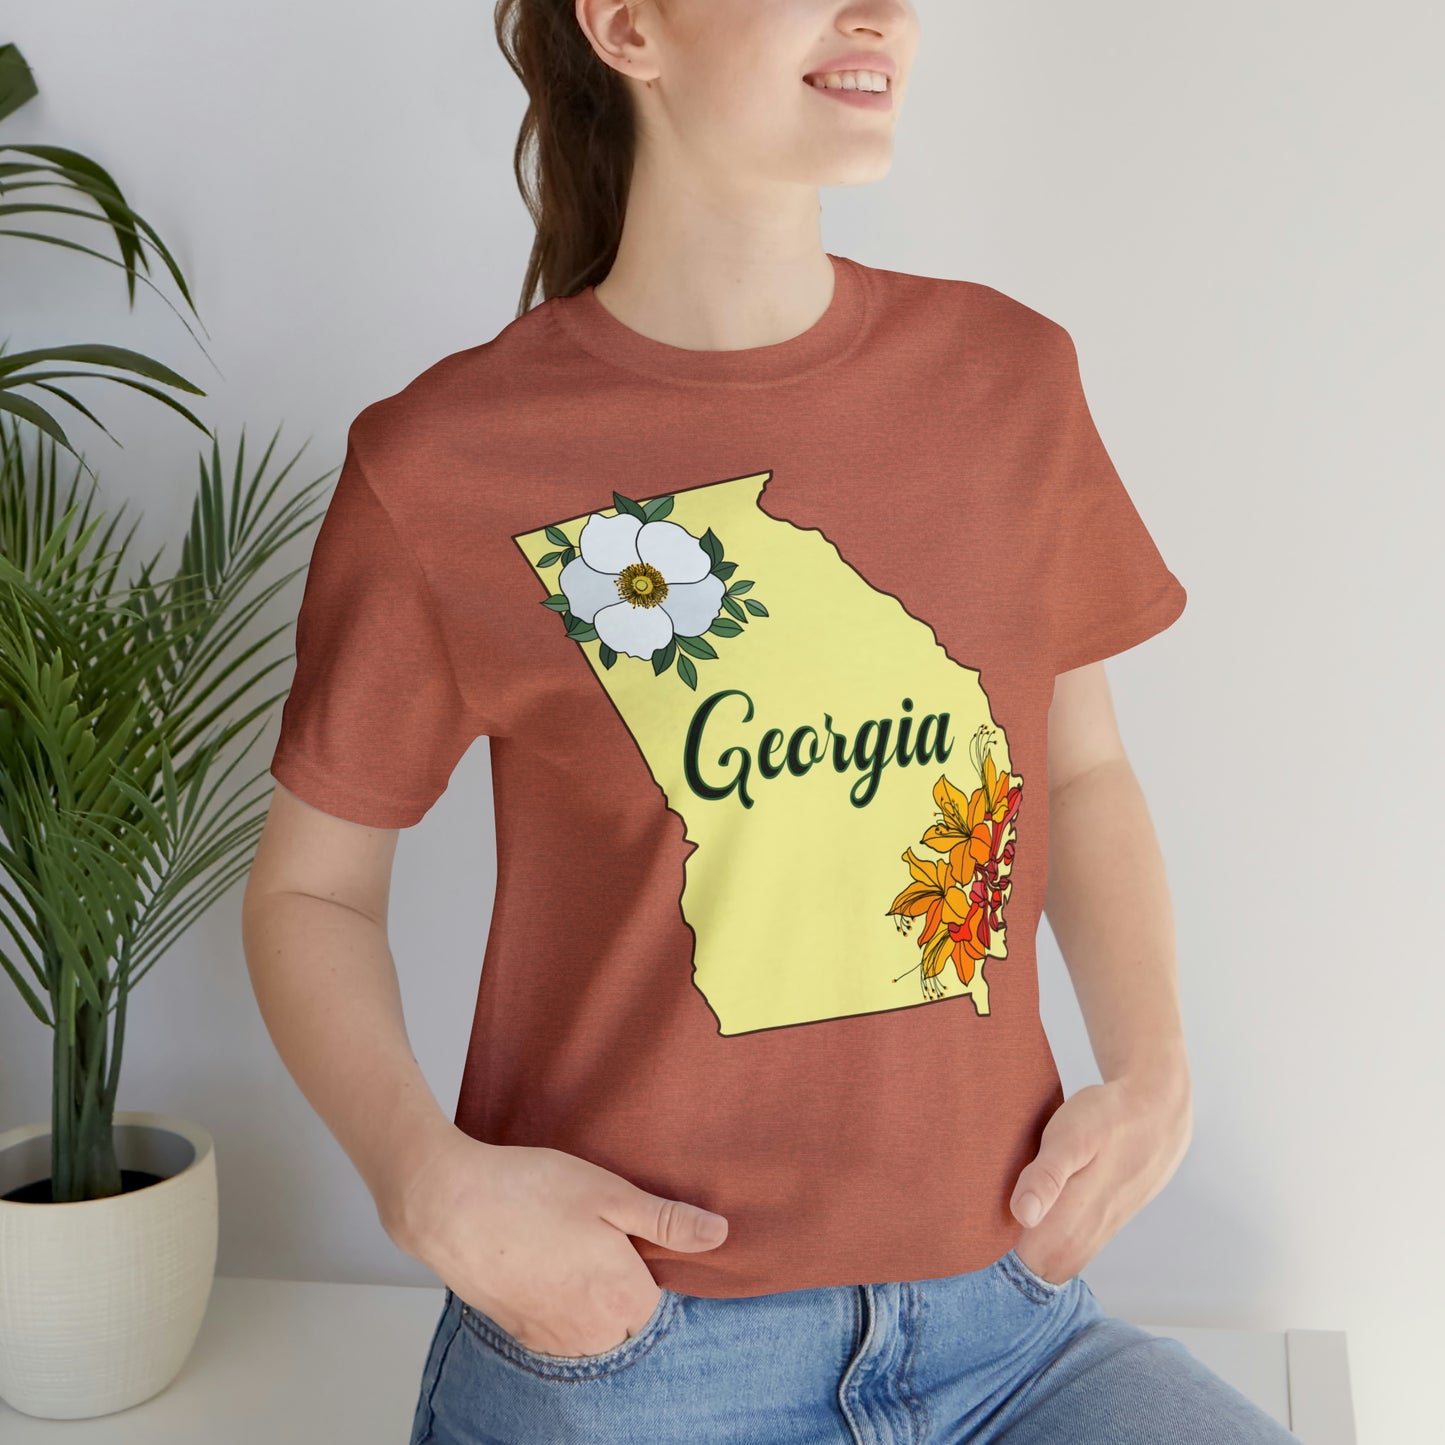 Georgia State Flower Short Sleeve T-shirt